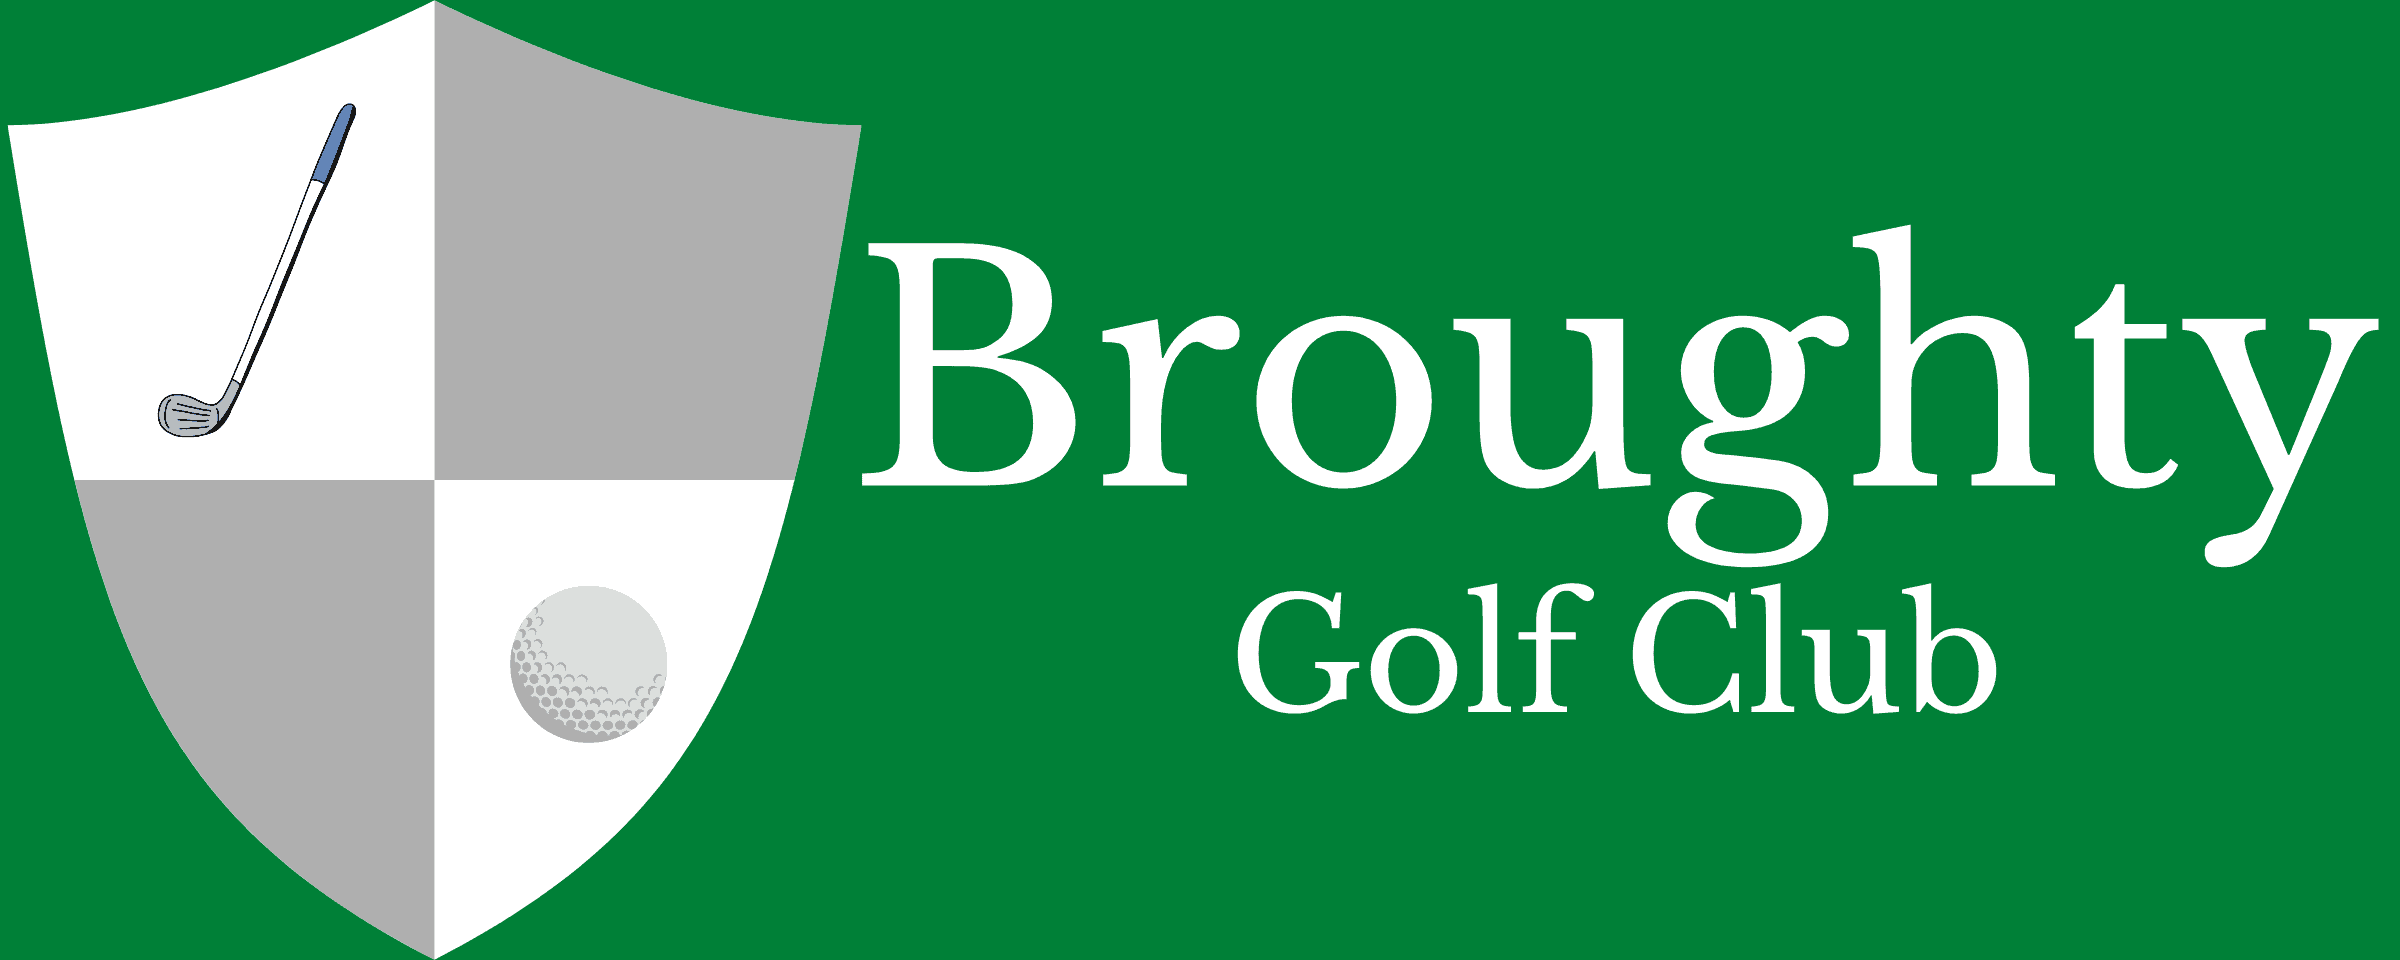 broughty golf club wide logo